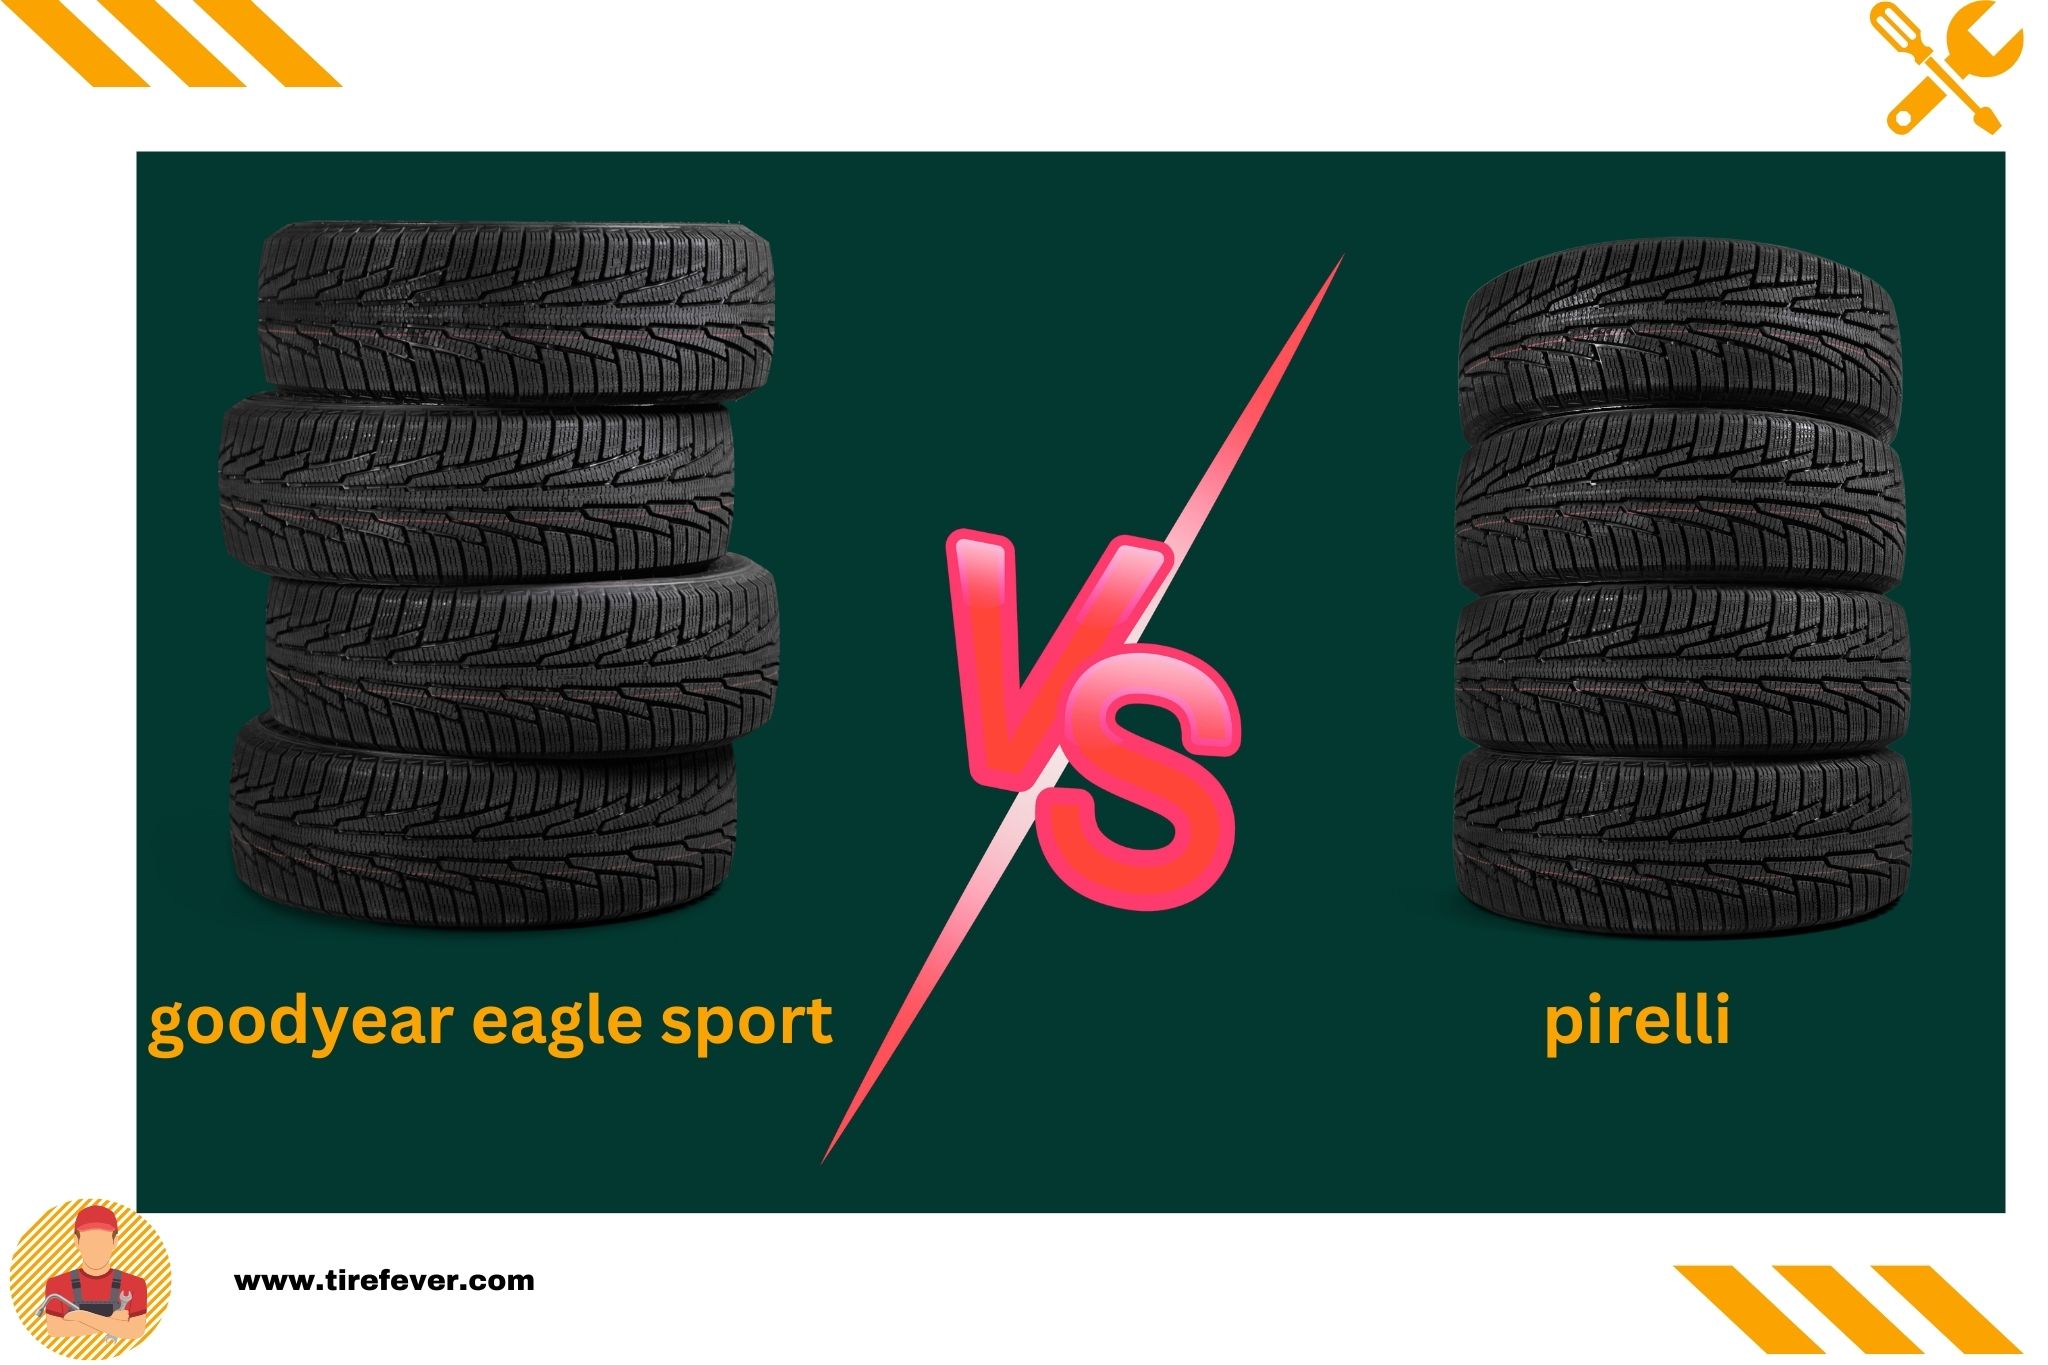 goodyear eagle sport vs pirelli